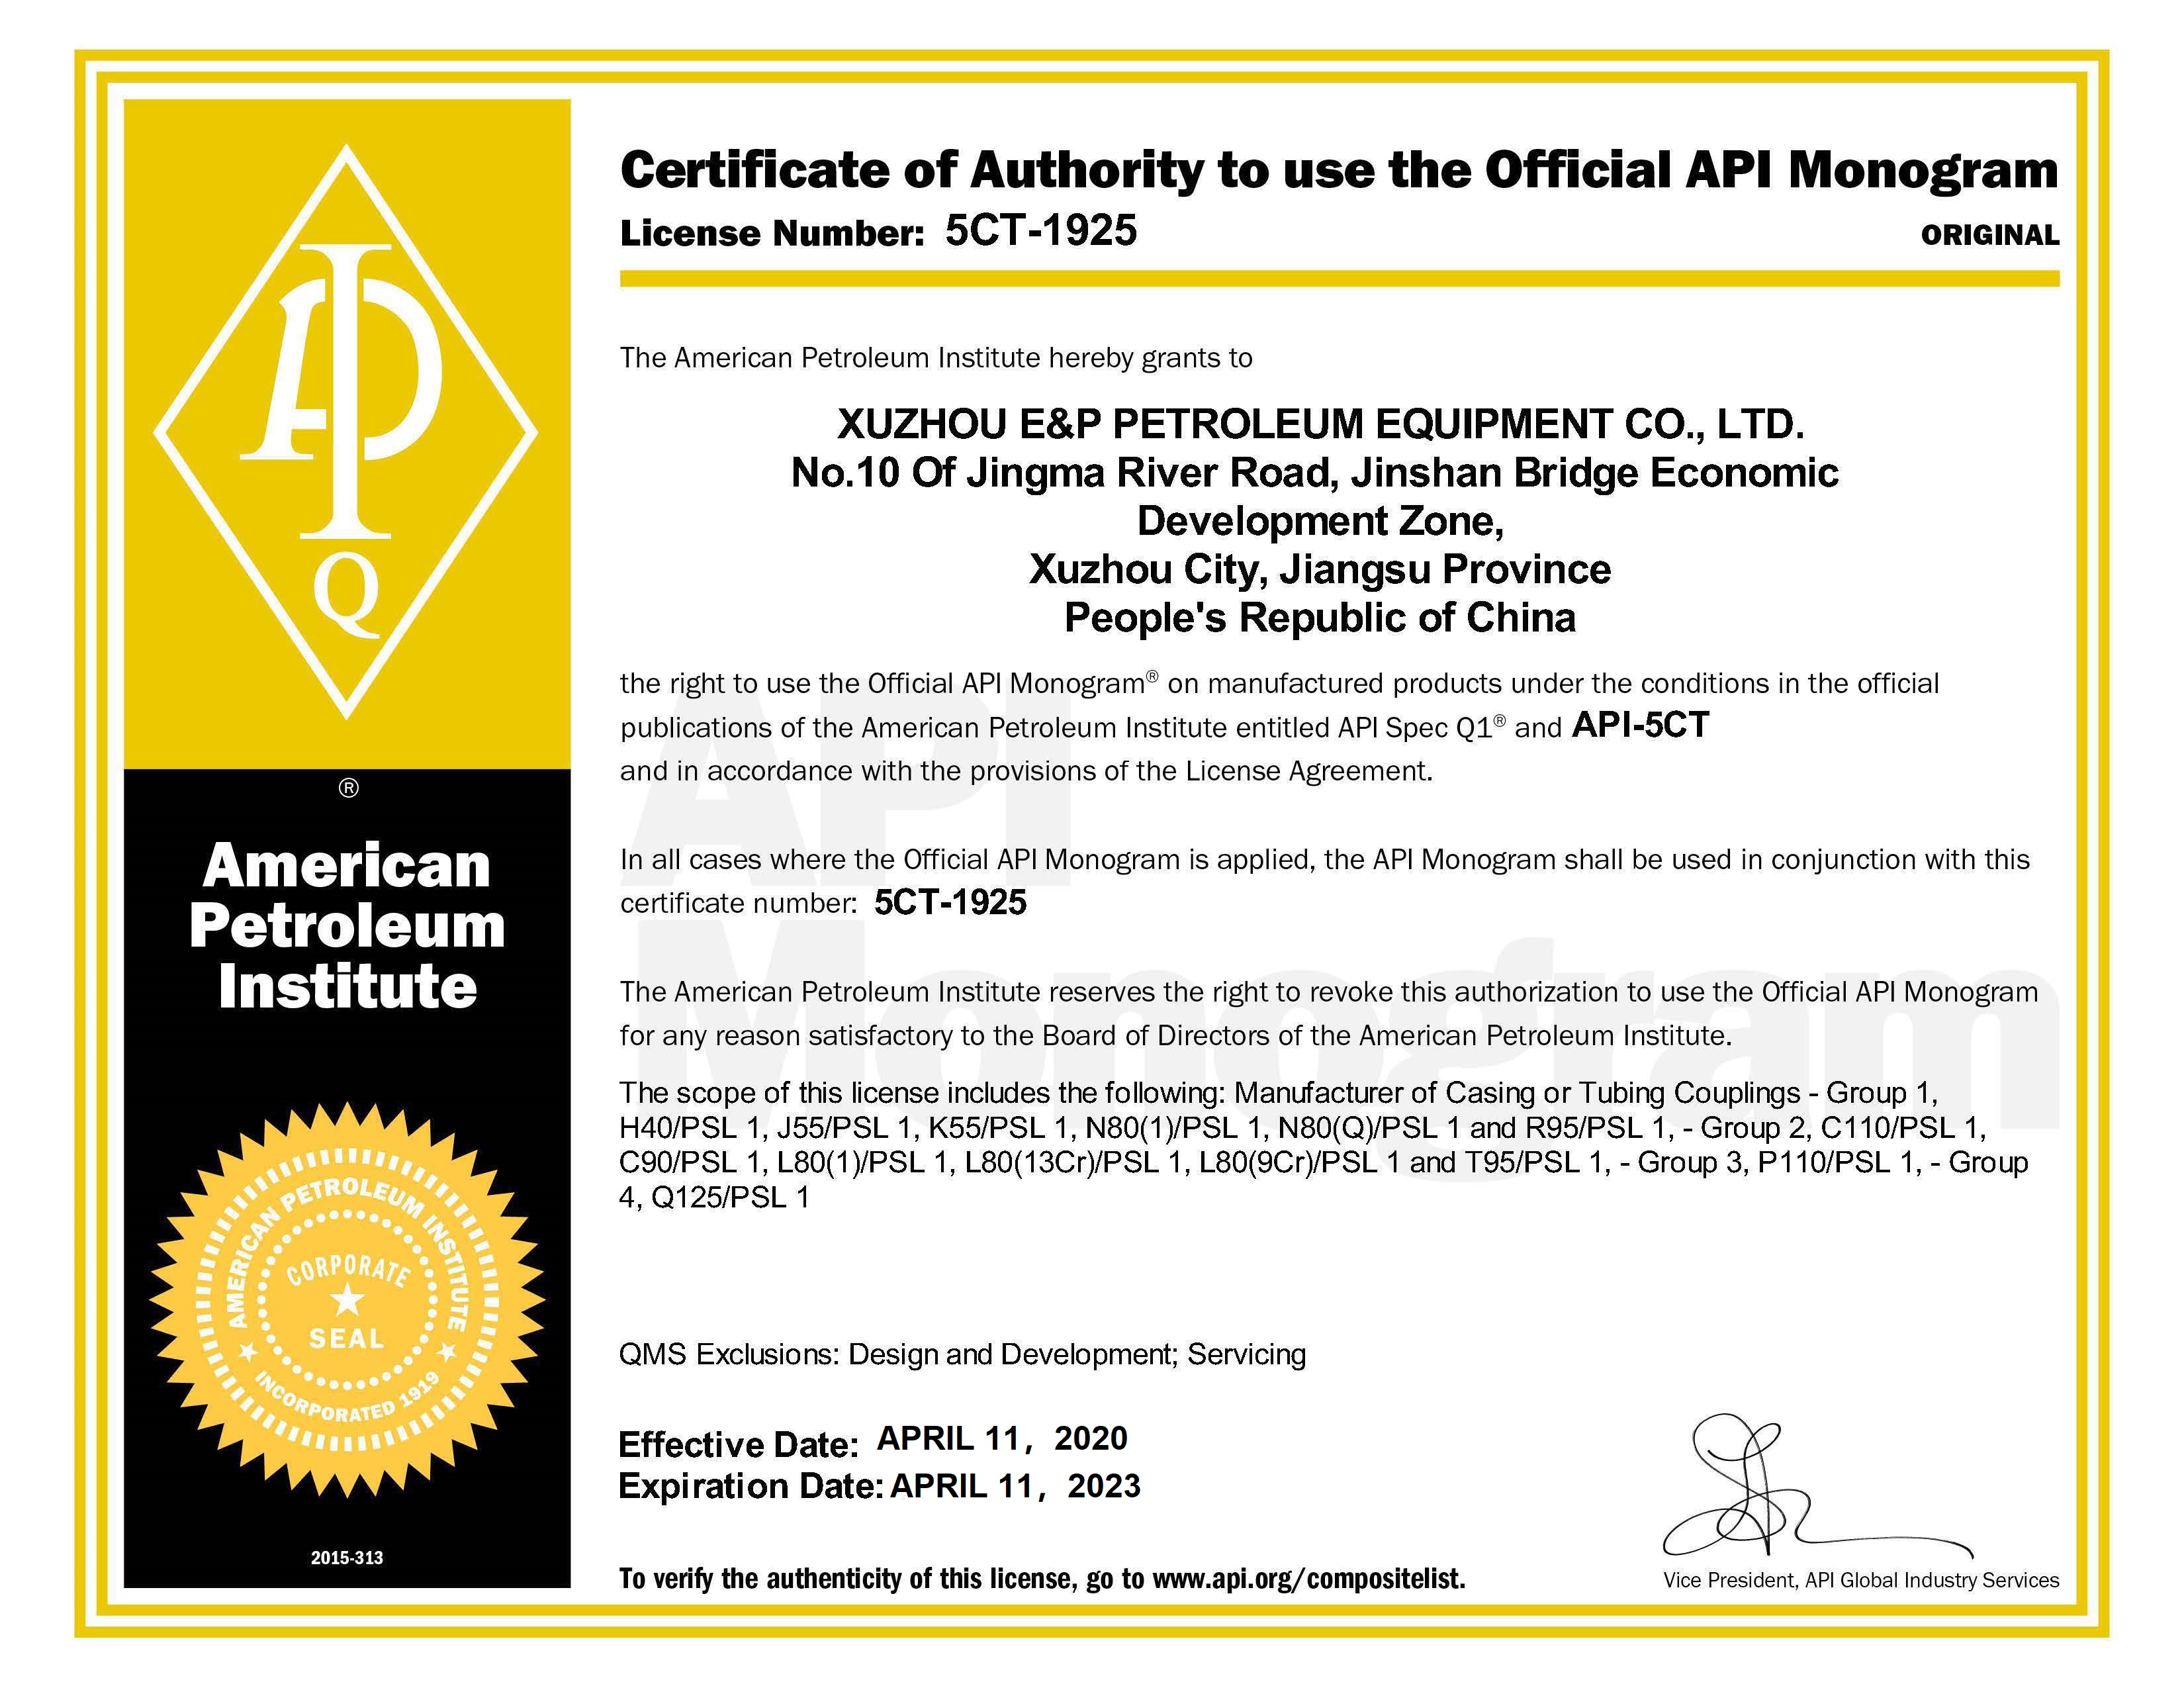 API Certificate 5CT-1925 Of XZEP